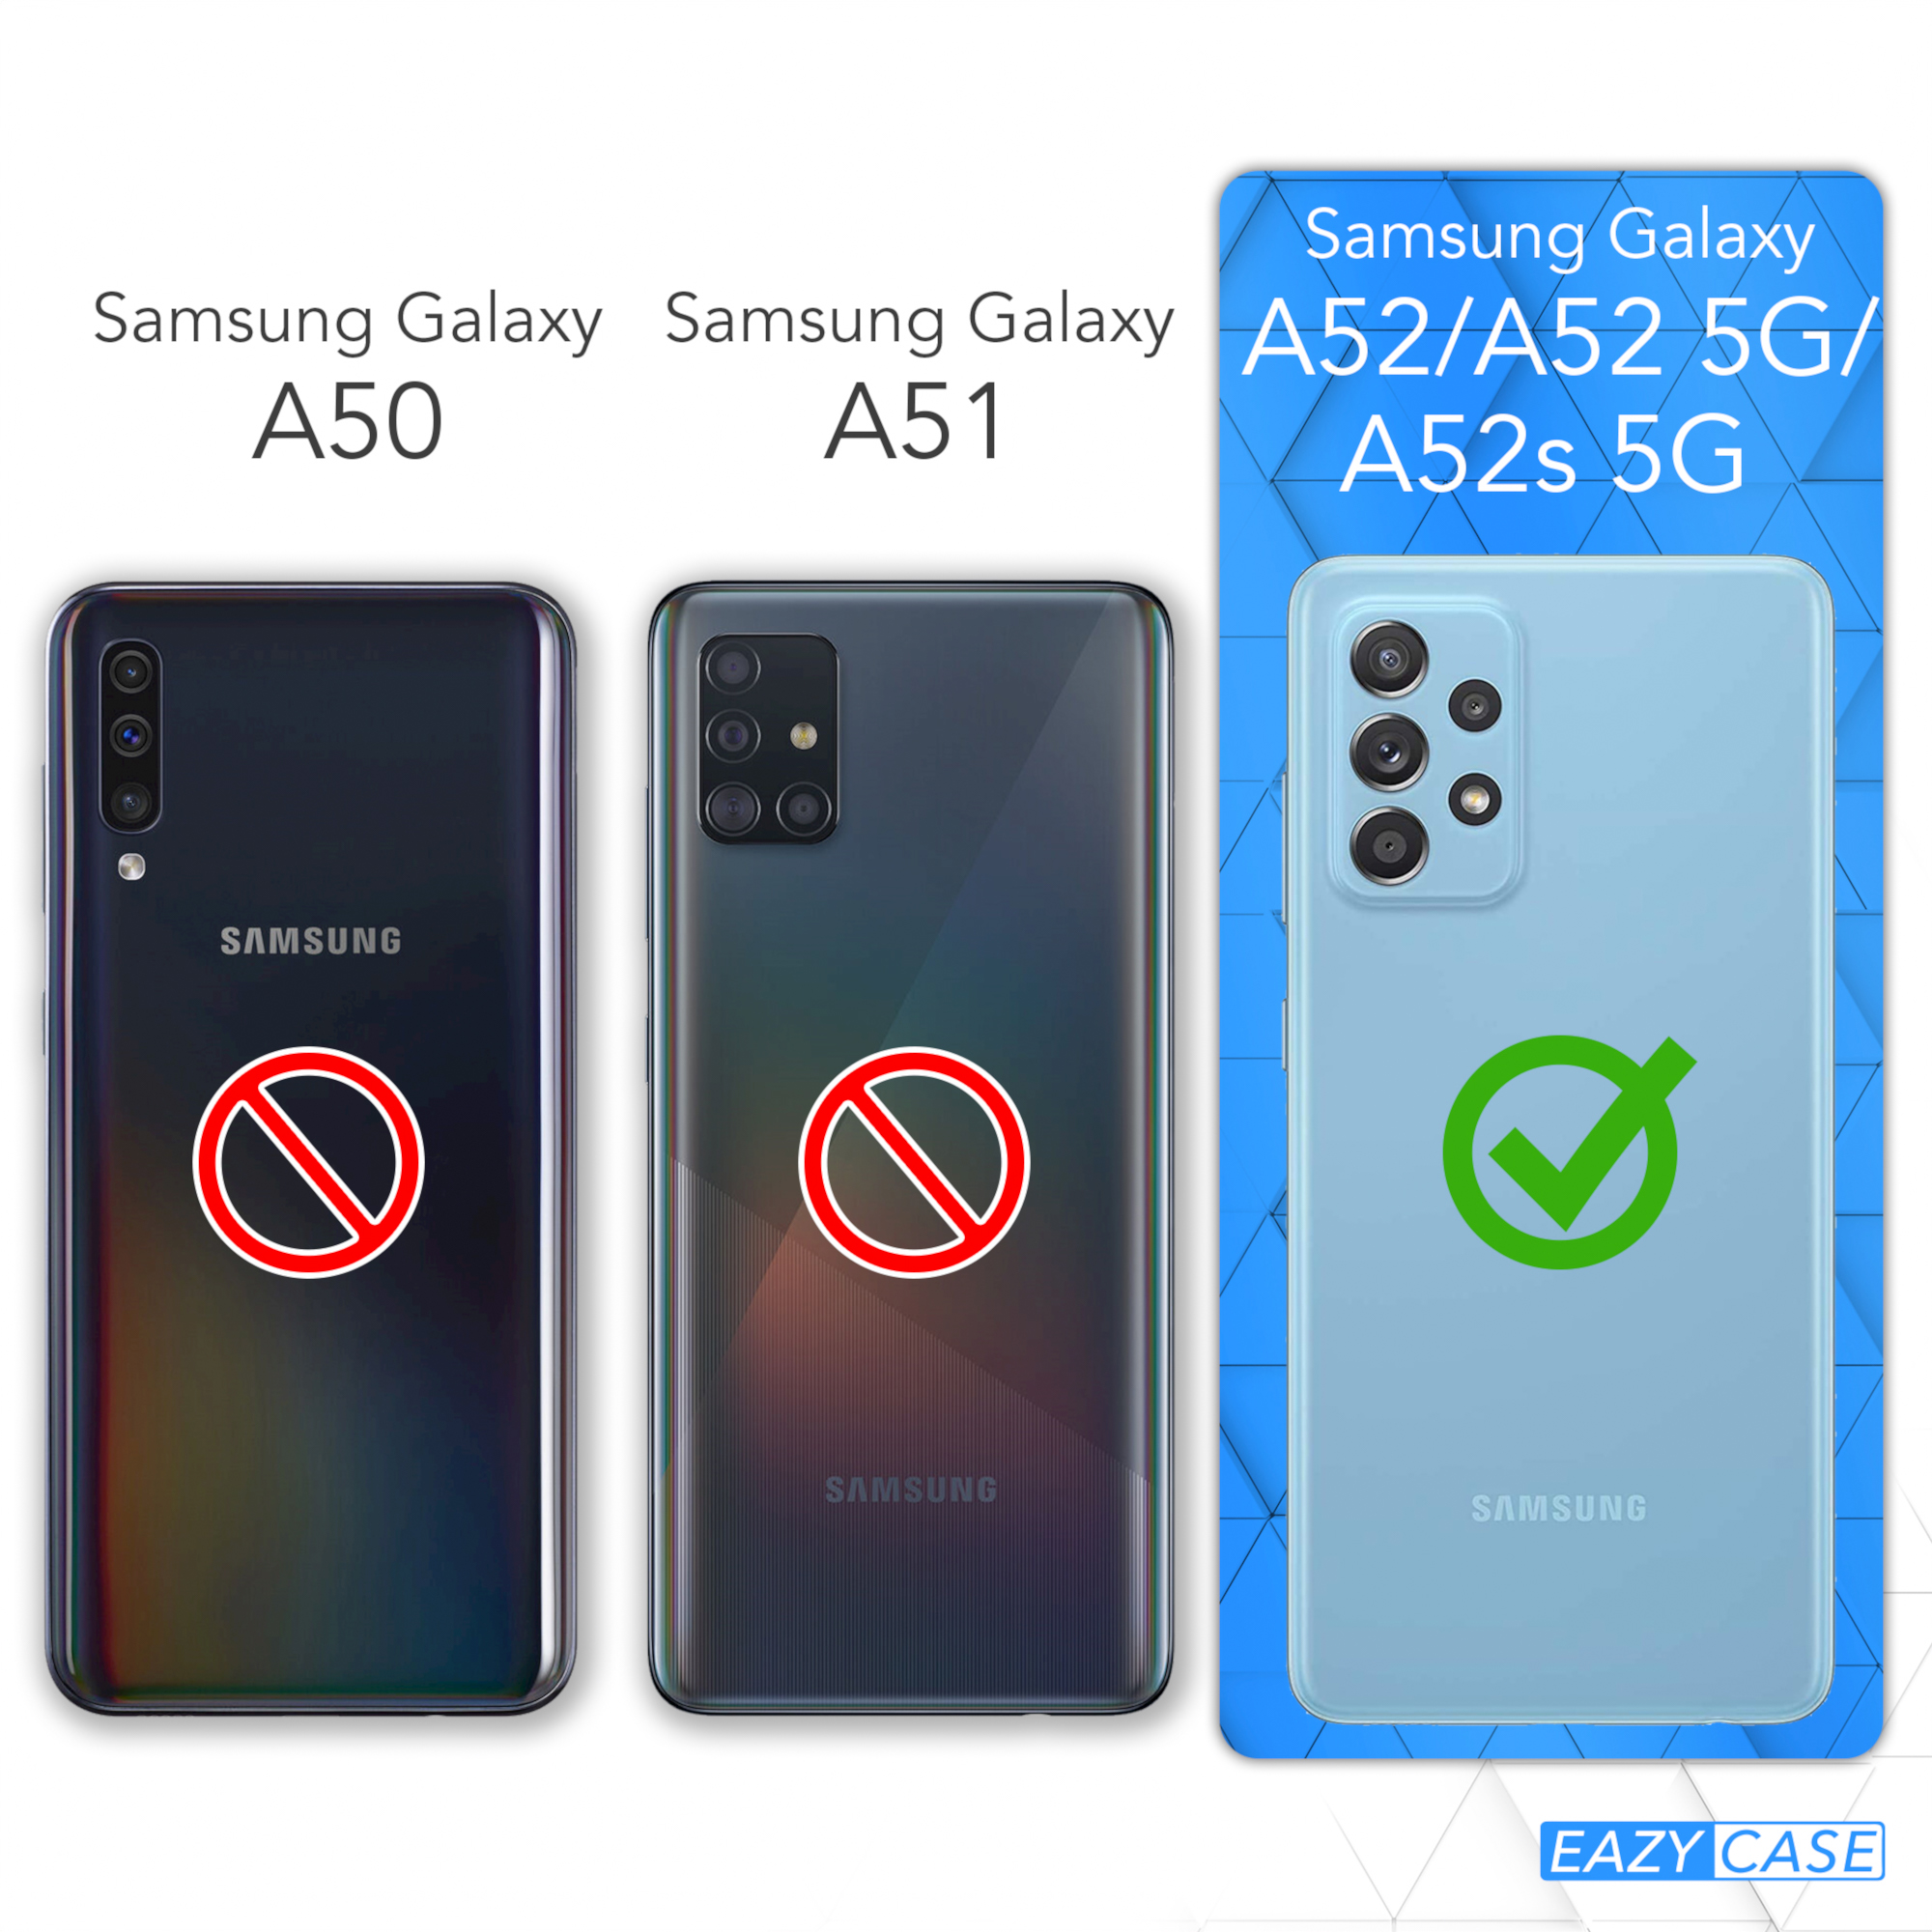 EAZY CASE Transparente Handyhülle A52s Kette Umhängetasche, A52 / / Galaxy mit Altrosa 5G unifarbend, Coral 5G, / Samsung, runder A52